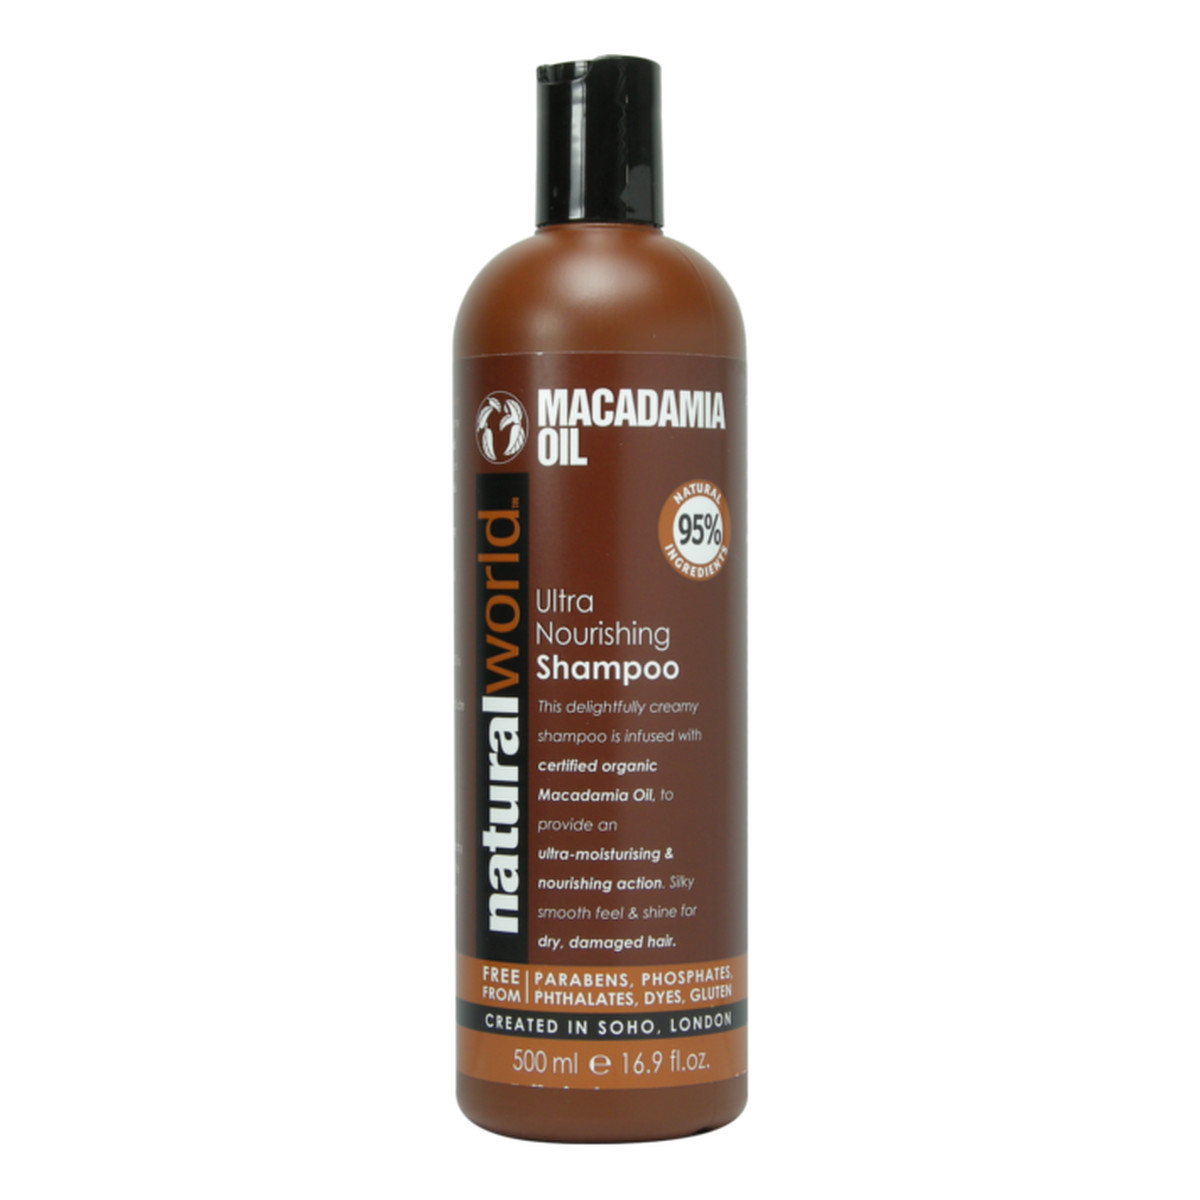 natural world szampon macadamia oil opinie